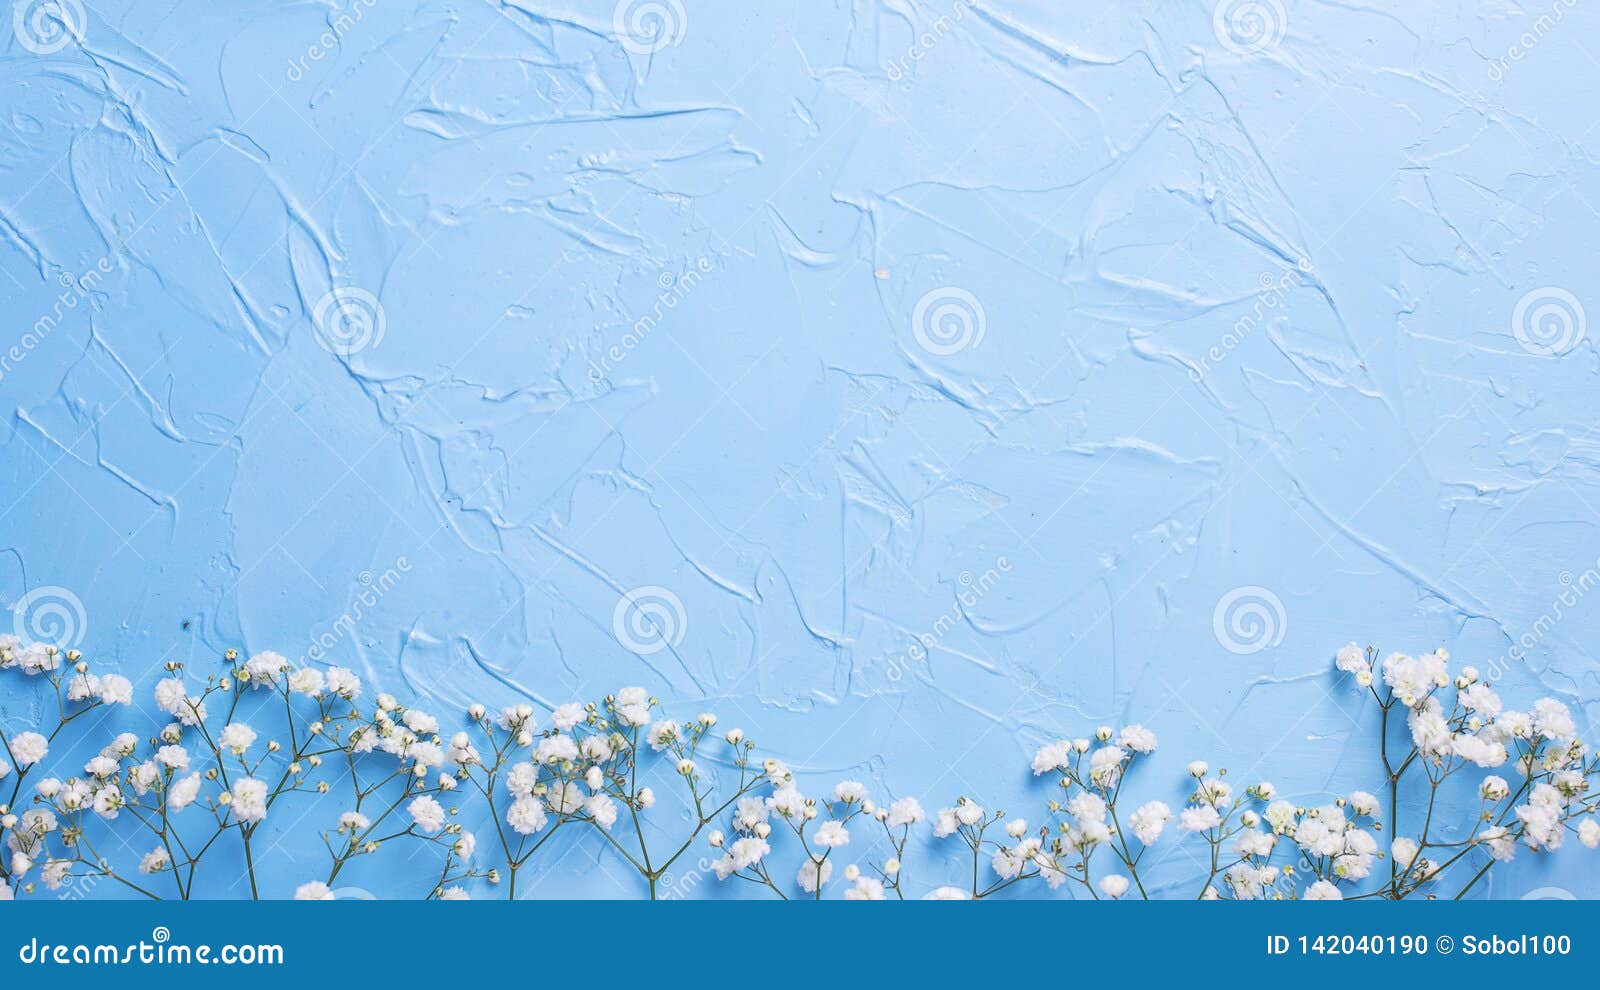 border from fresh white gypsofila flowers on blue textured background